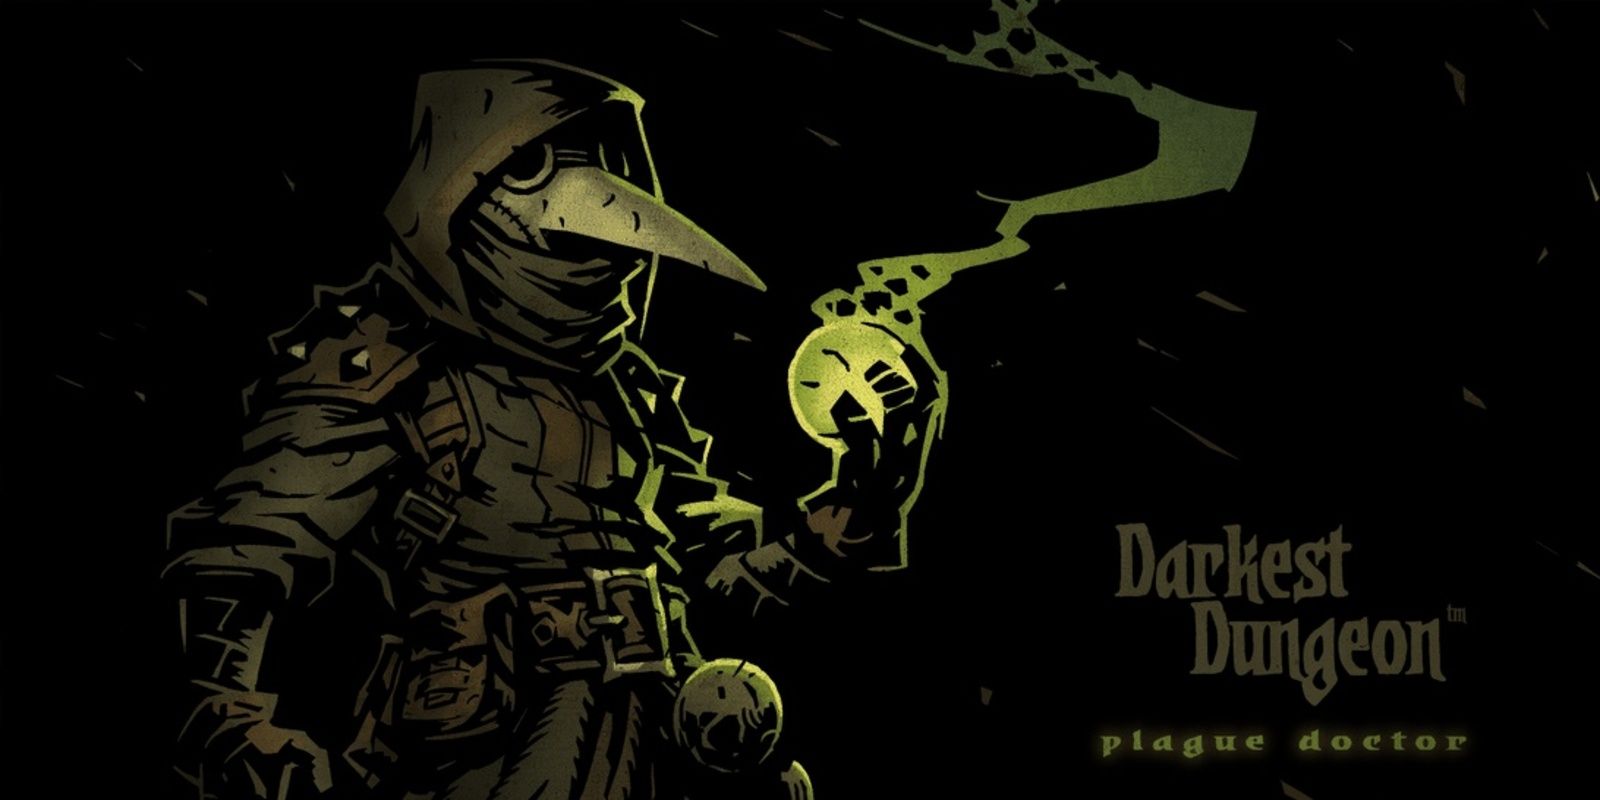 Red Hook Studio's official wallpaper for Darkest Dungeon's Plague Doctor